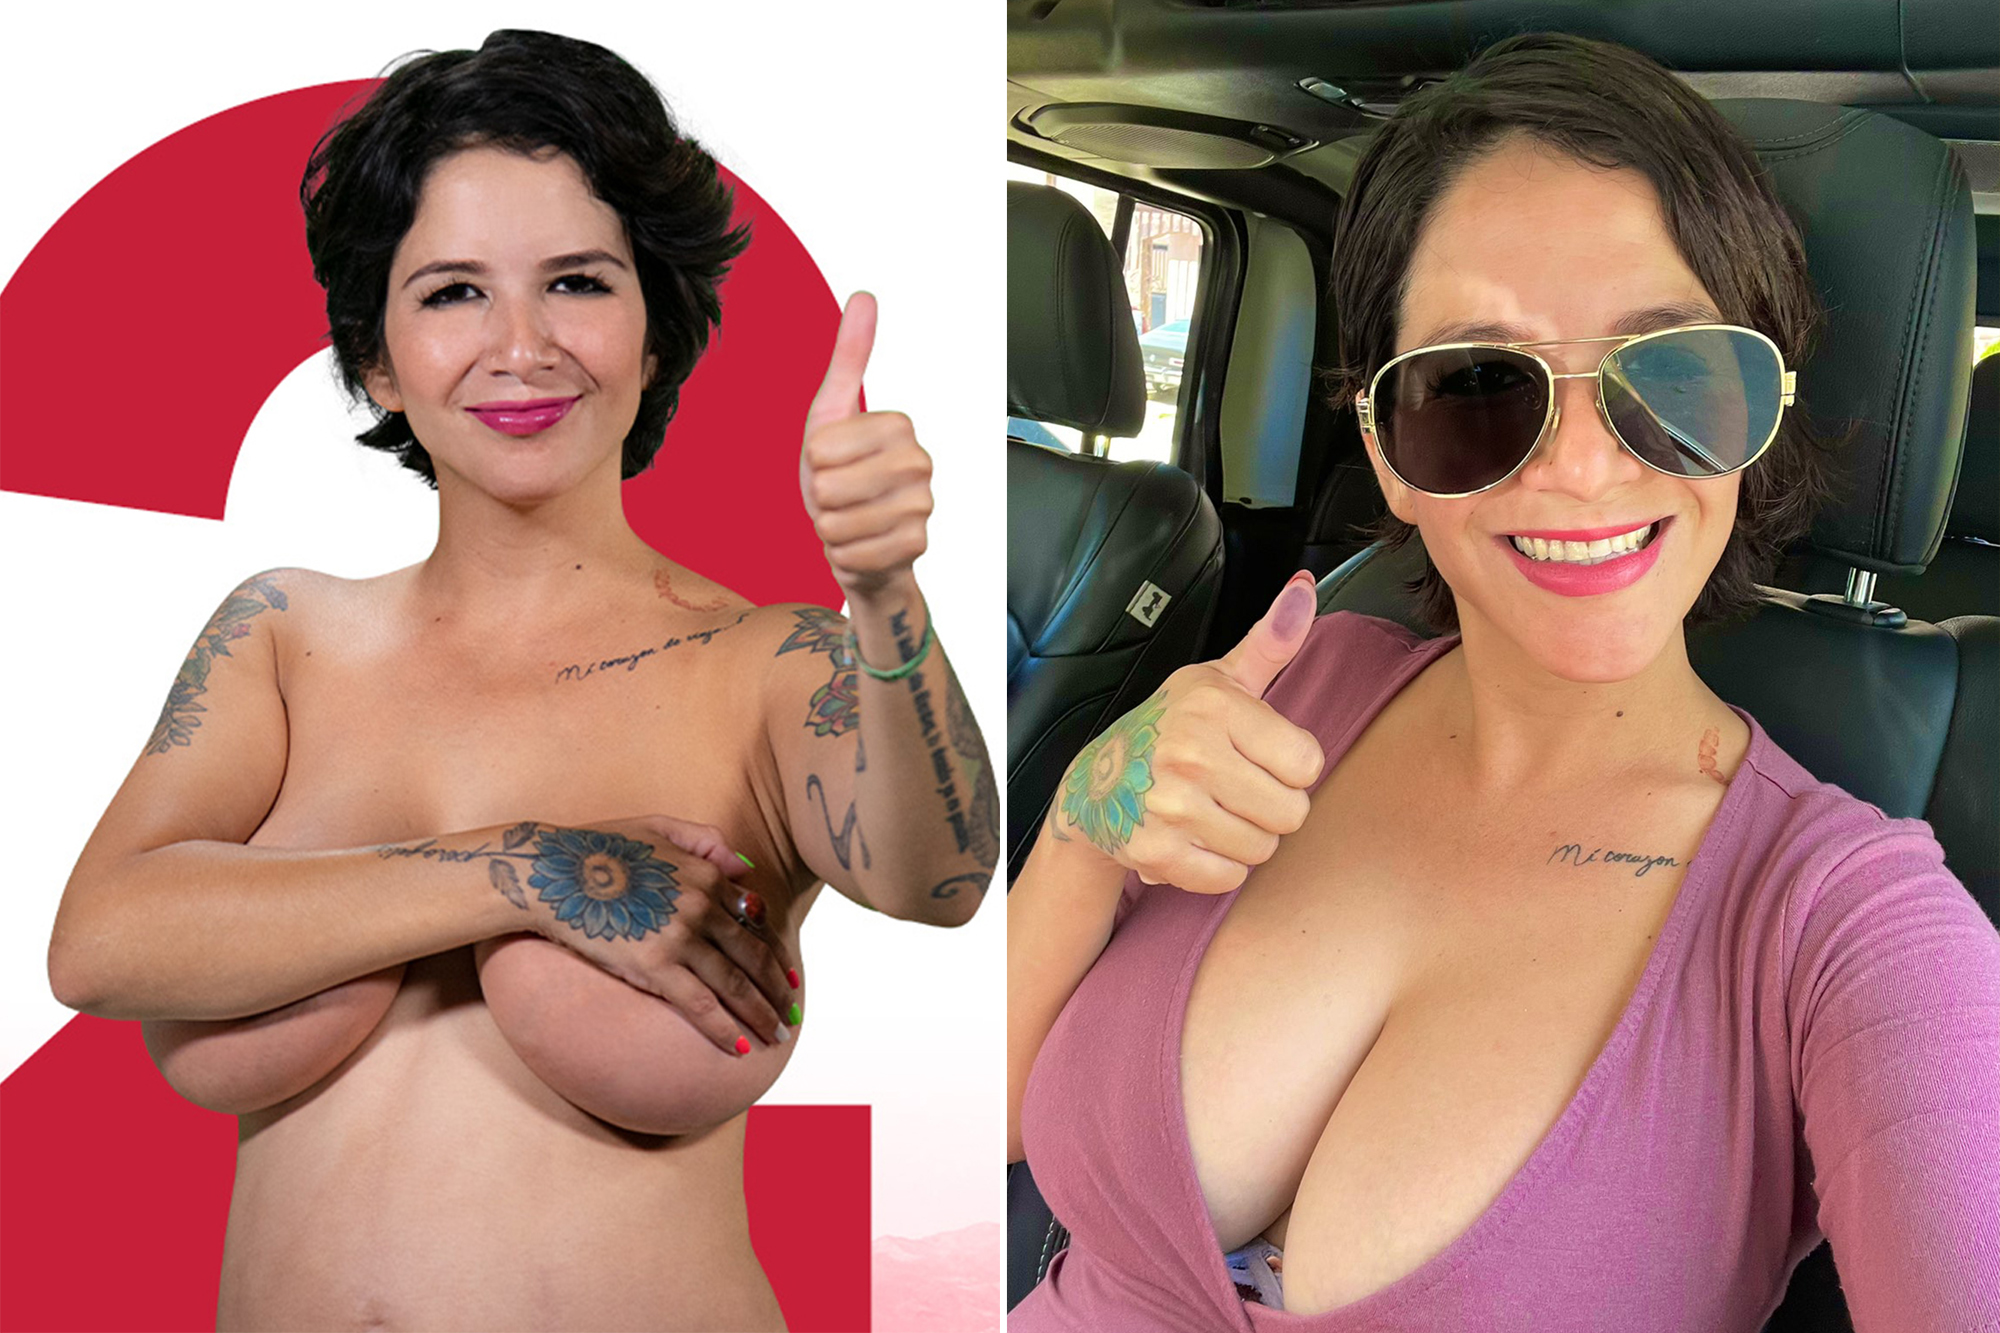 carl bezuidenhout add big tits mexican girls photo